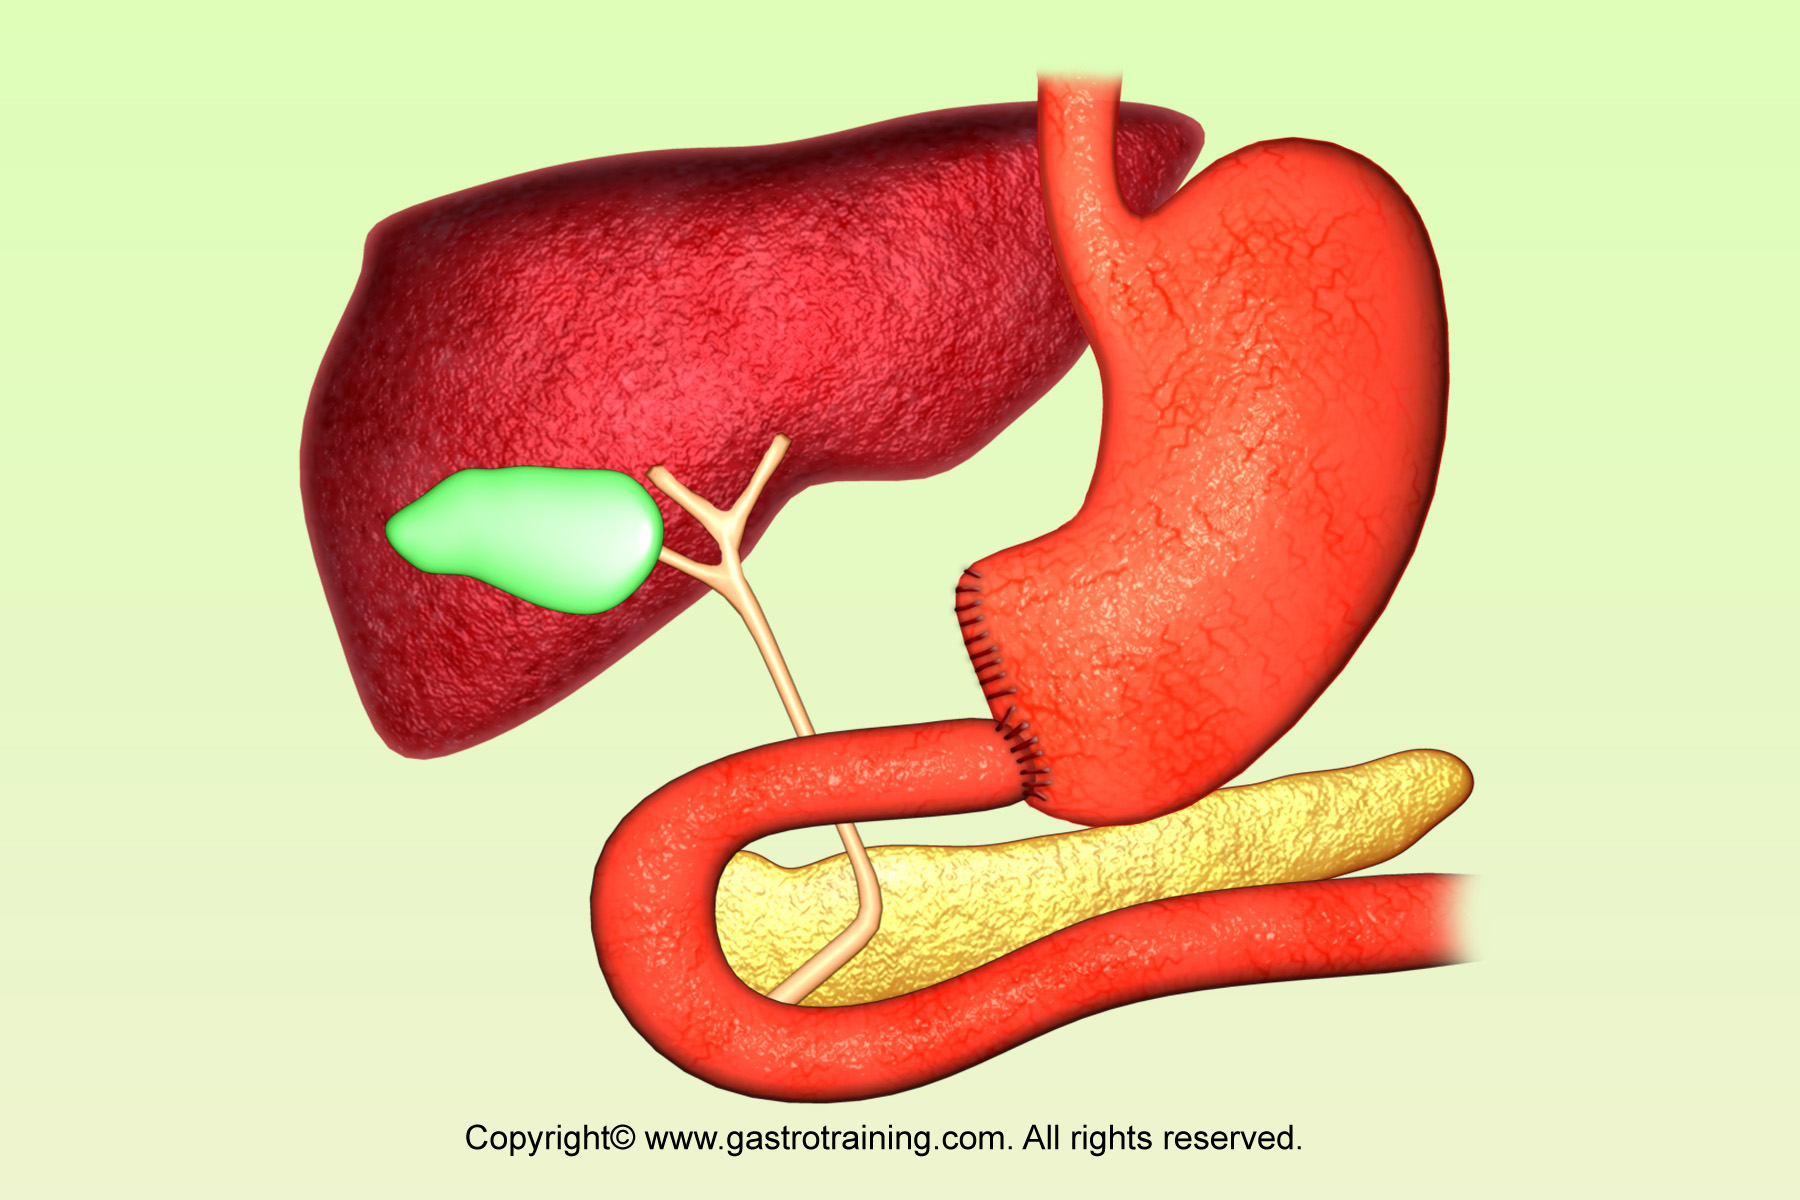 Резекция желудка анемия